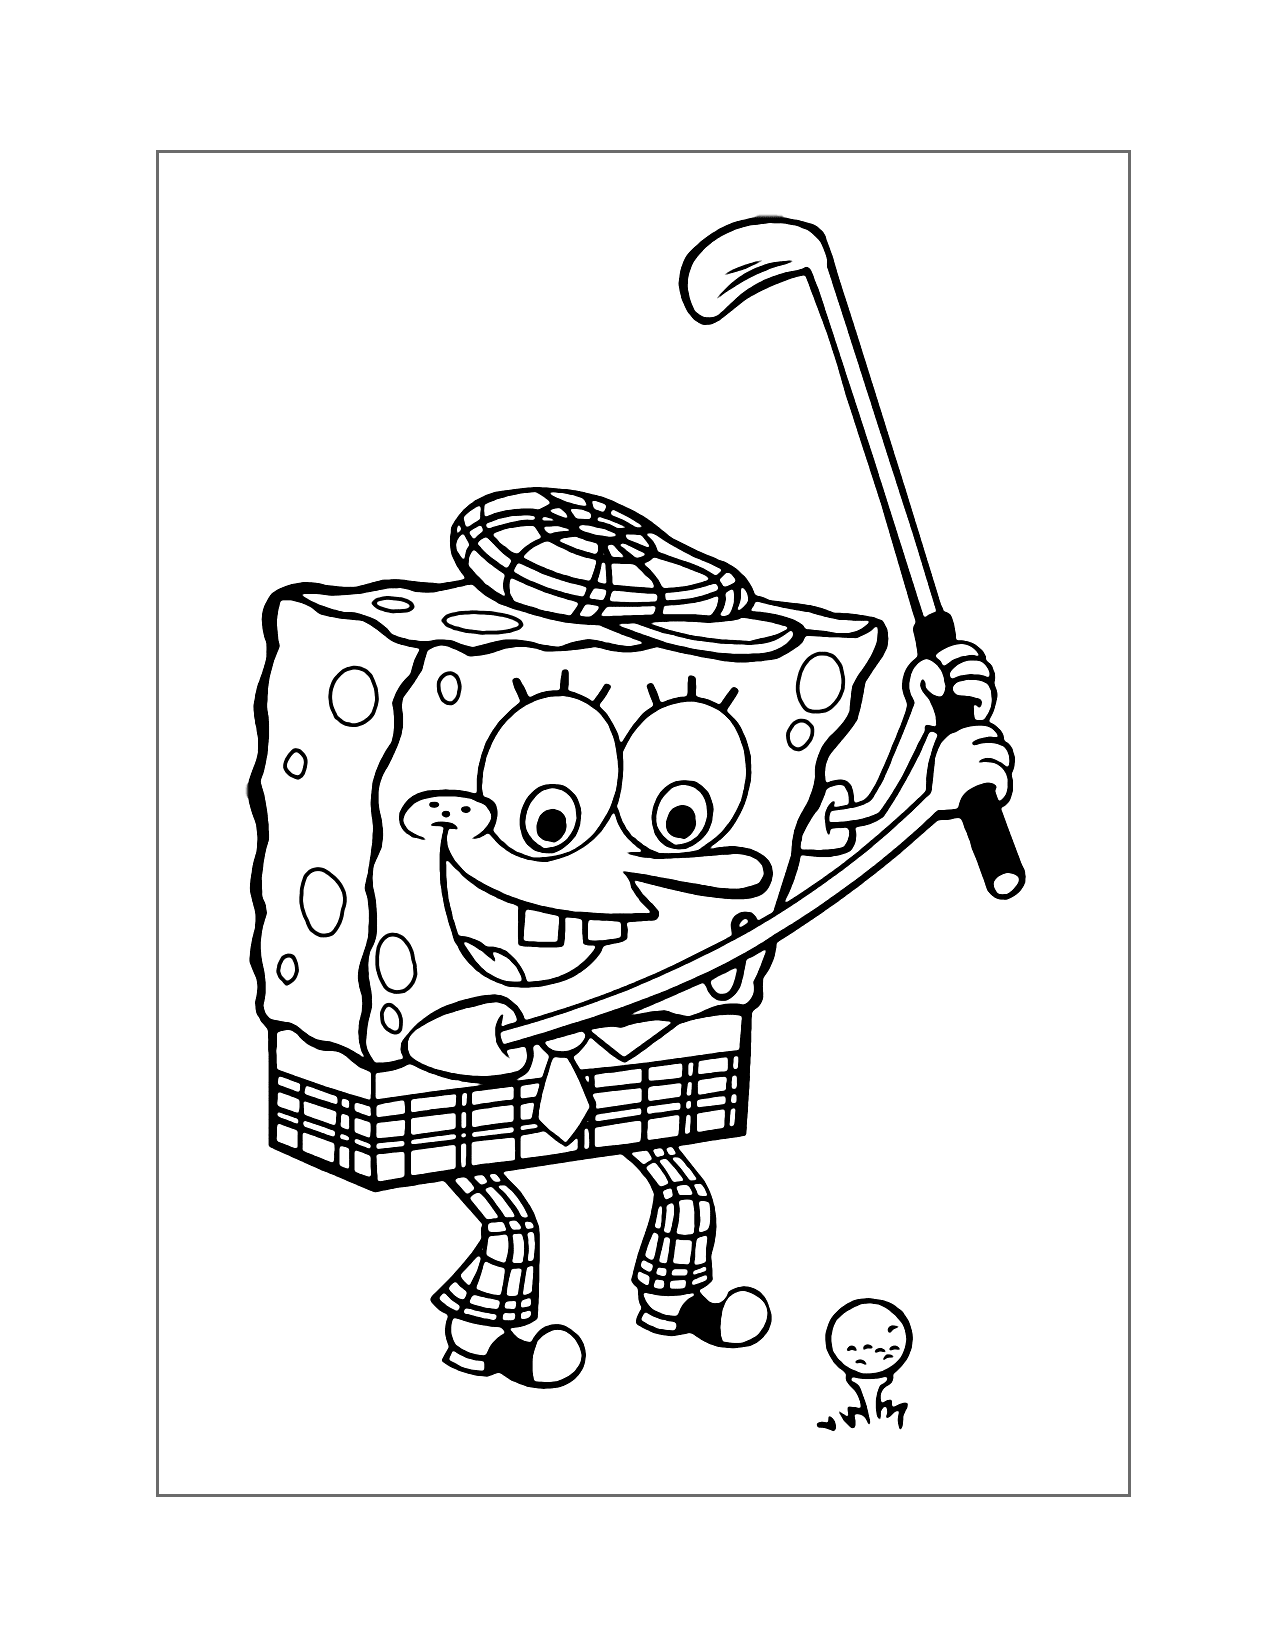 Golfer Spongebob Coloring Page